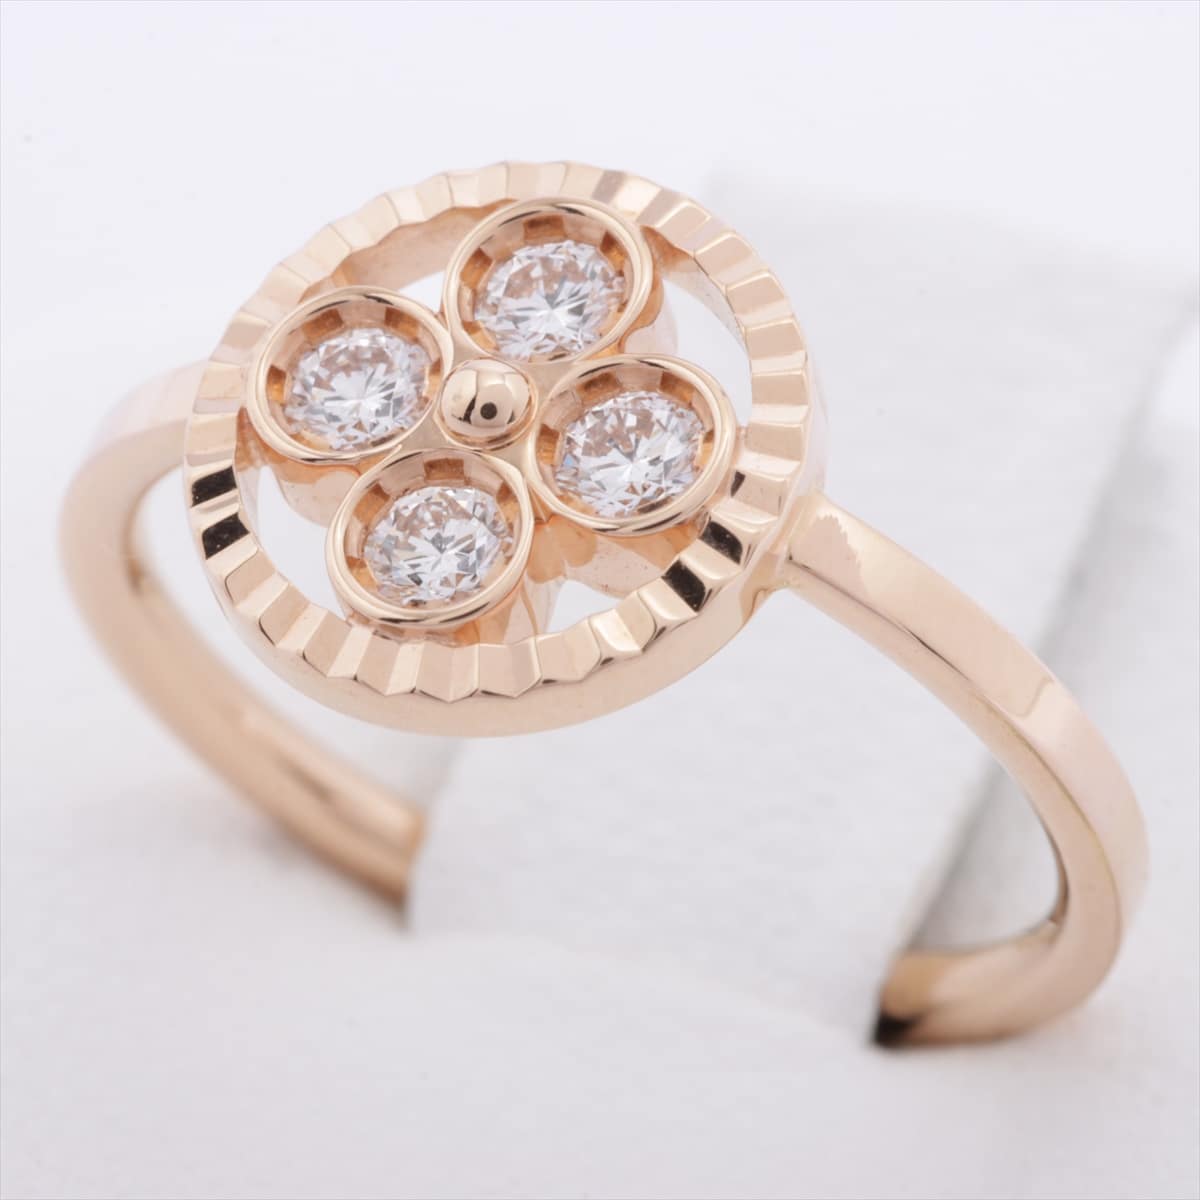 Louis Vuitton Berg Sun Blossom diamond rings 750(PG) 2.2g 48